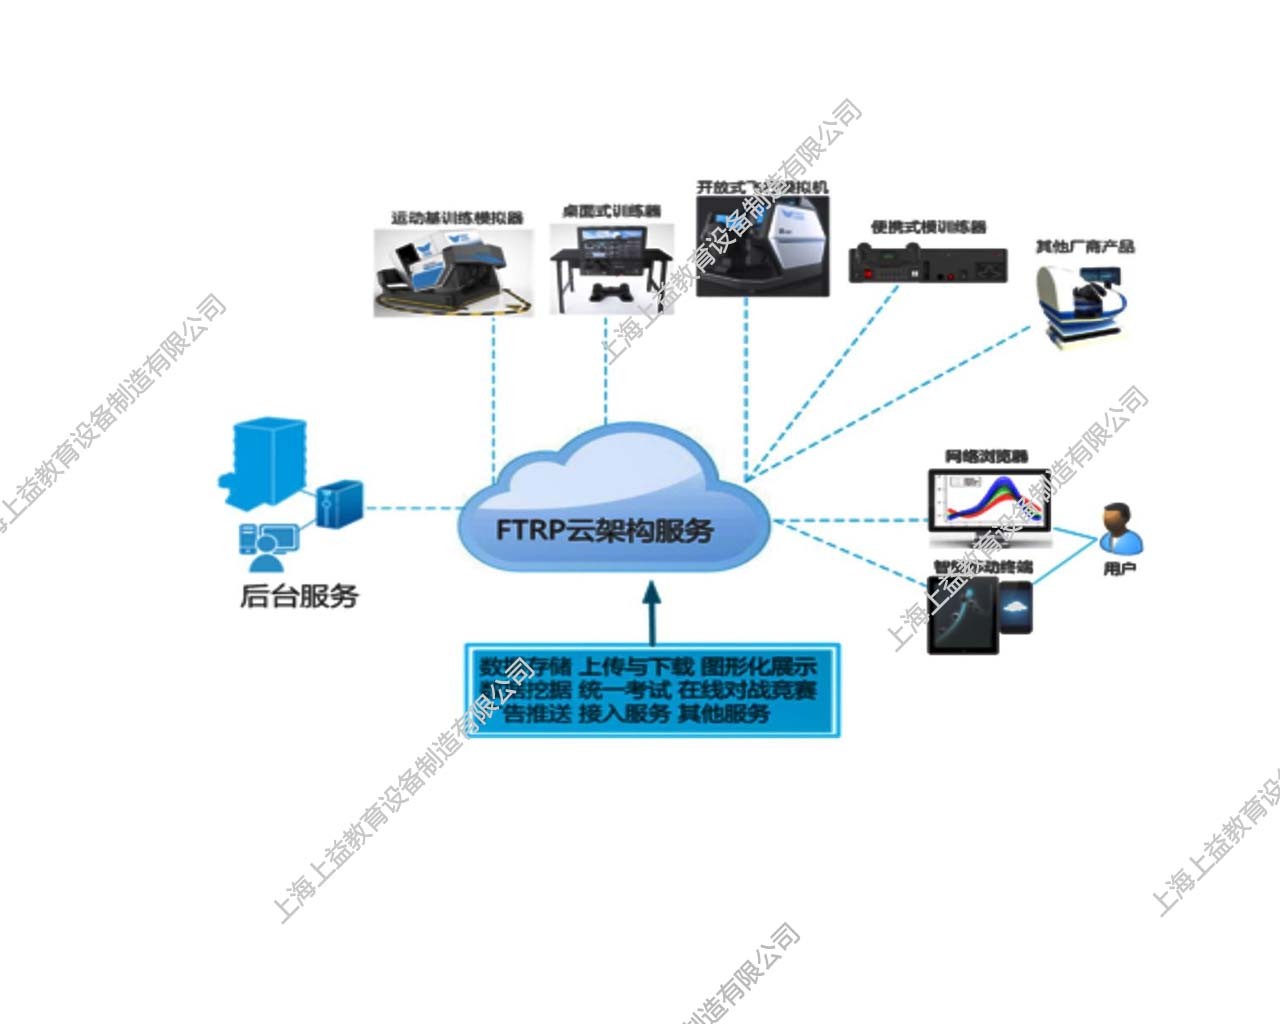 FTRP互聯網運行平臺